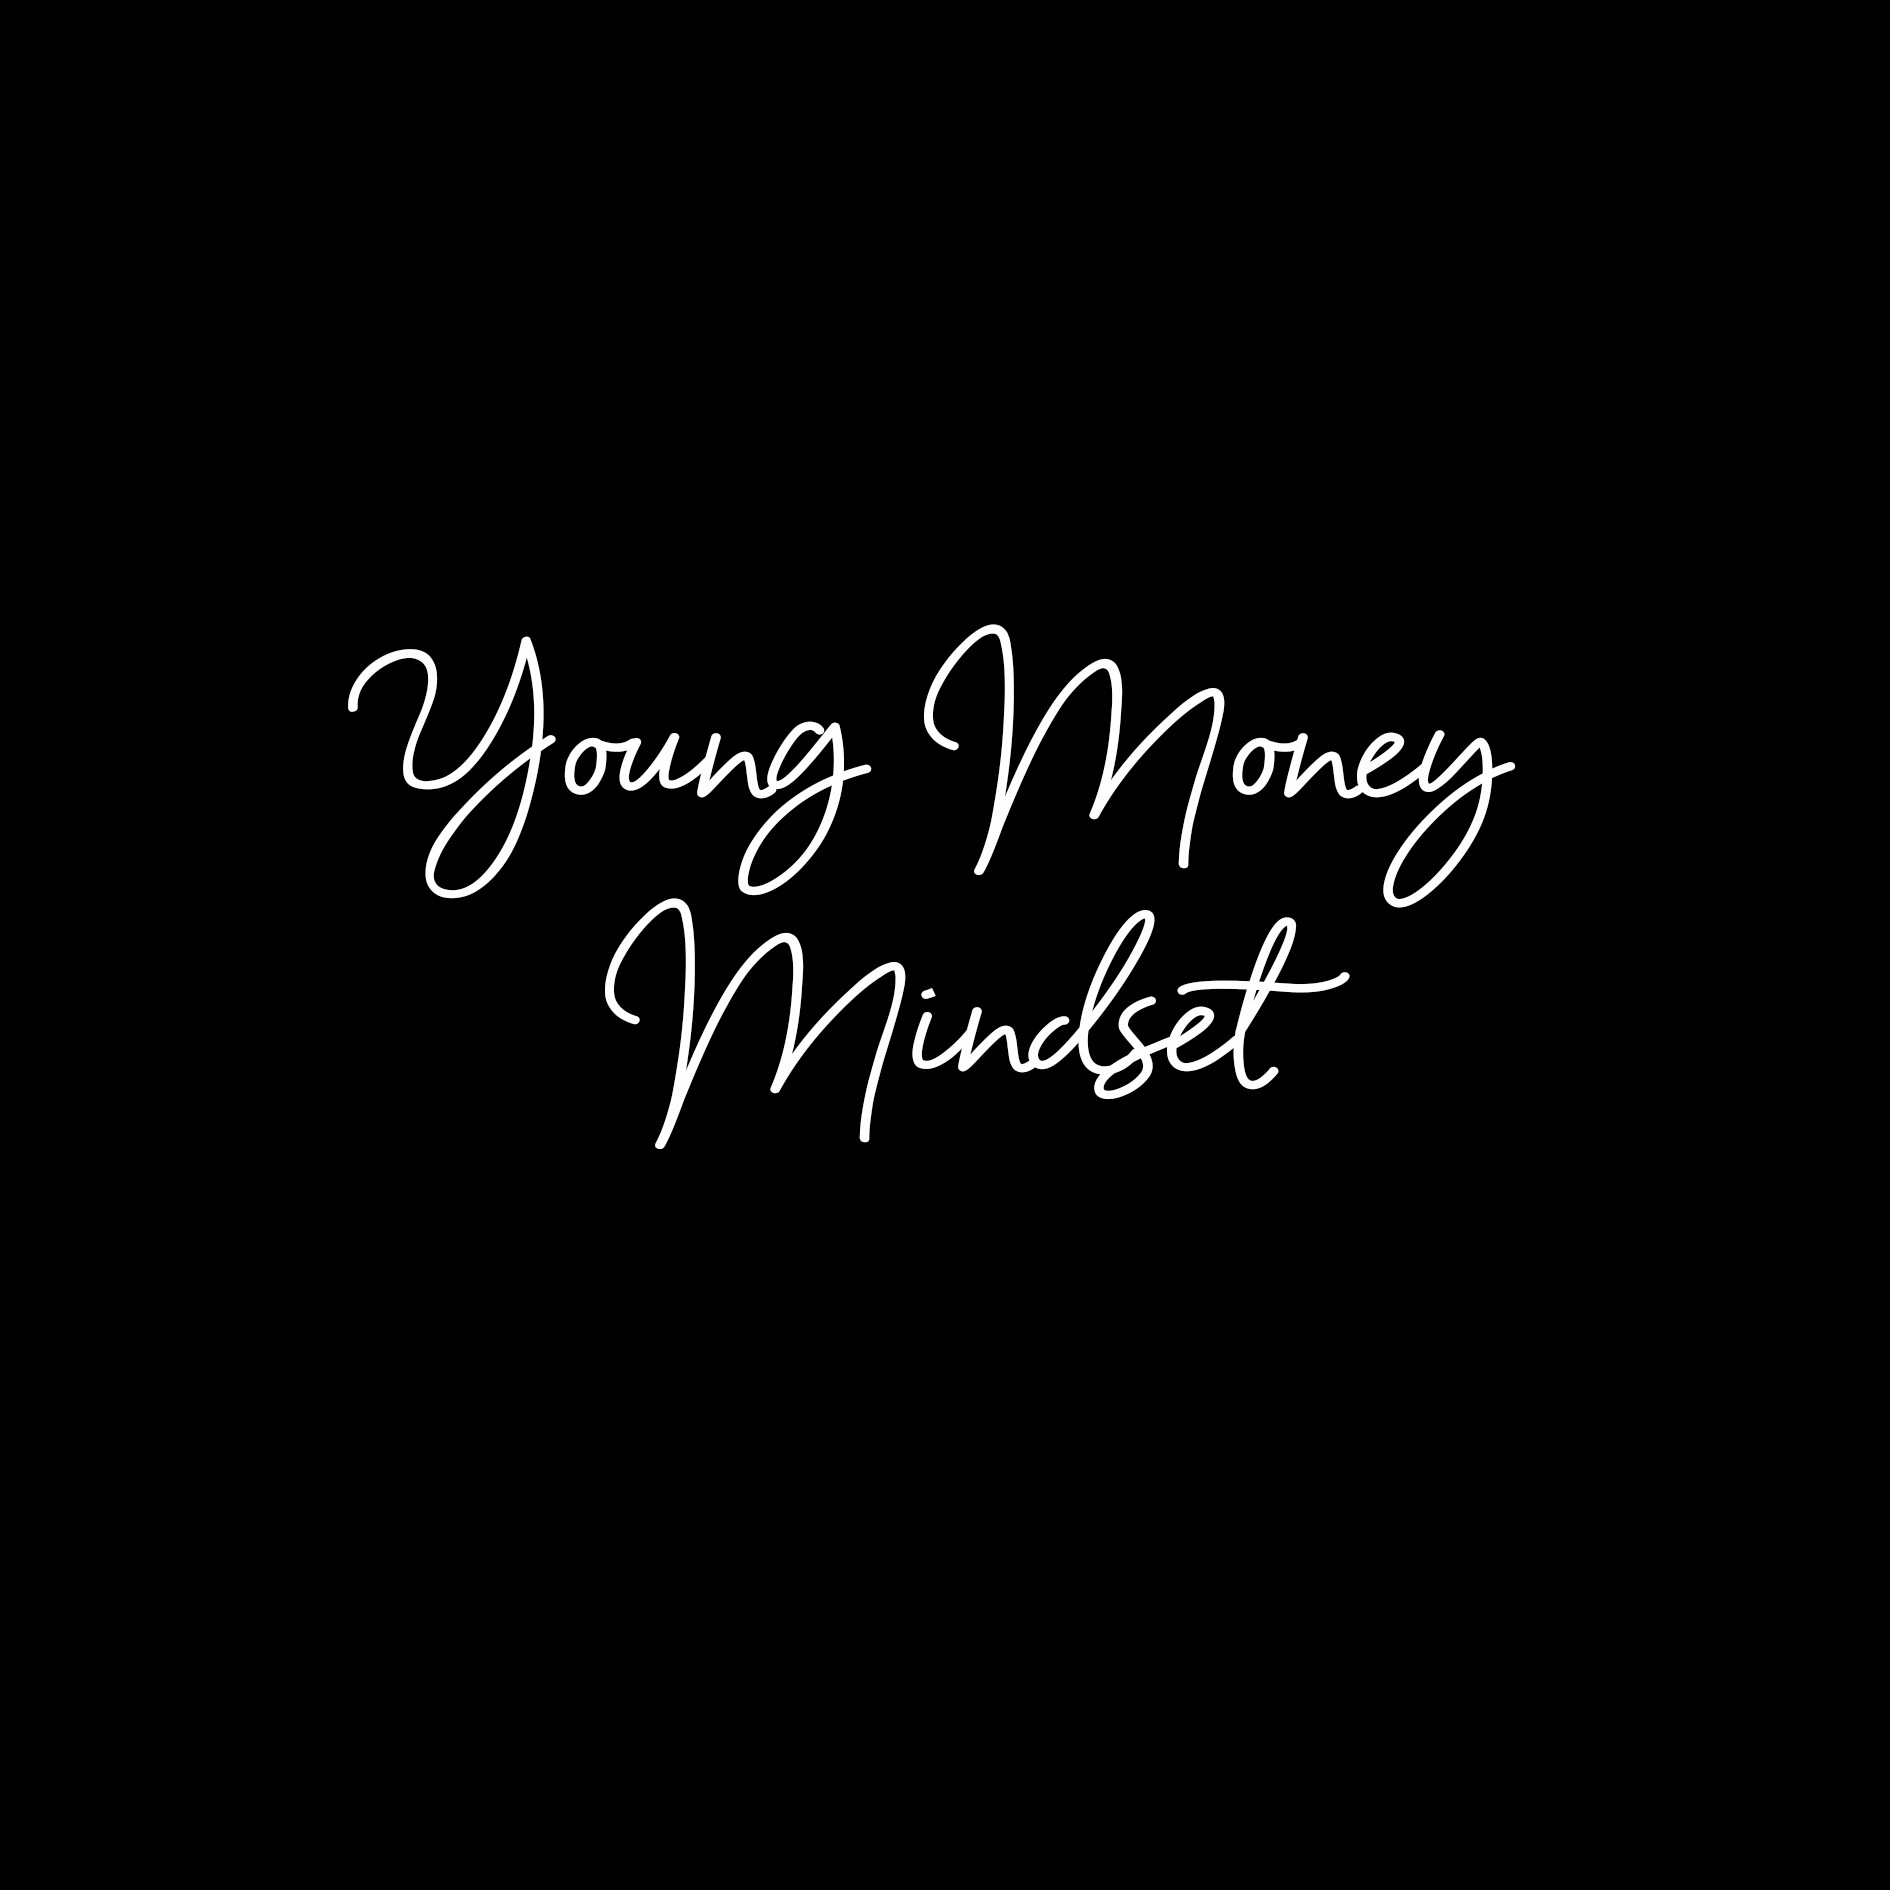 Young Money Mindset